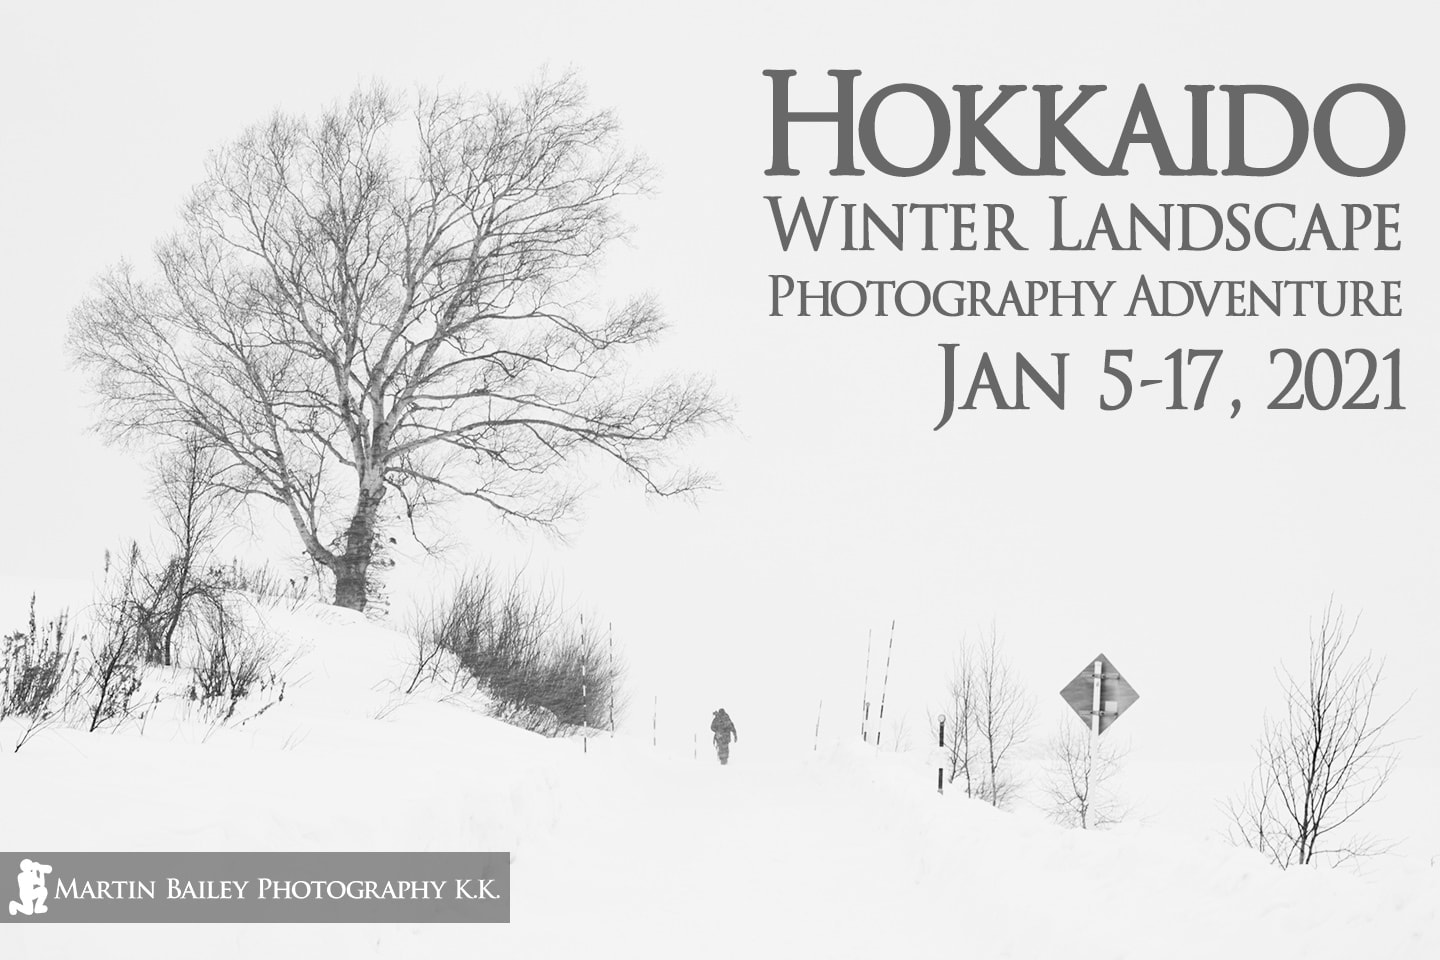 Hokkaido Winter Landscape Photography Adventure Tour & Workshop 2021